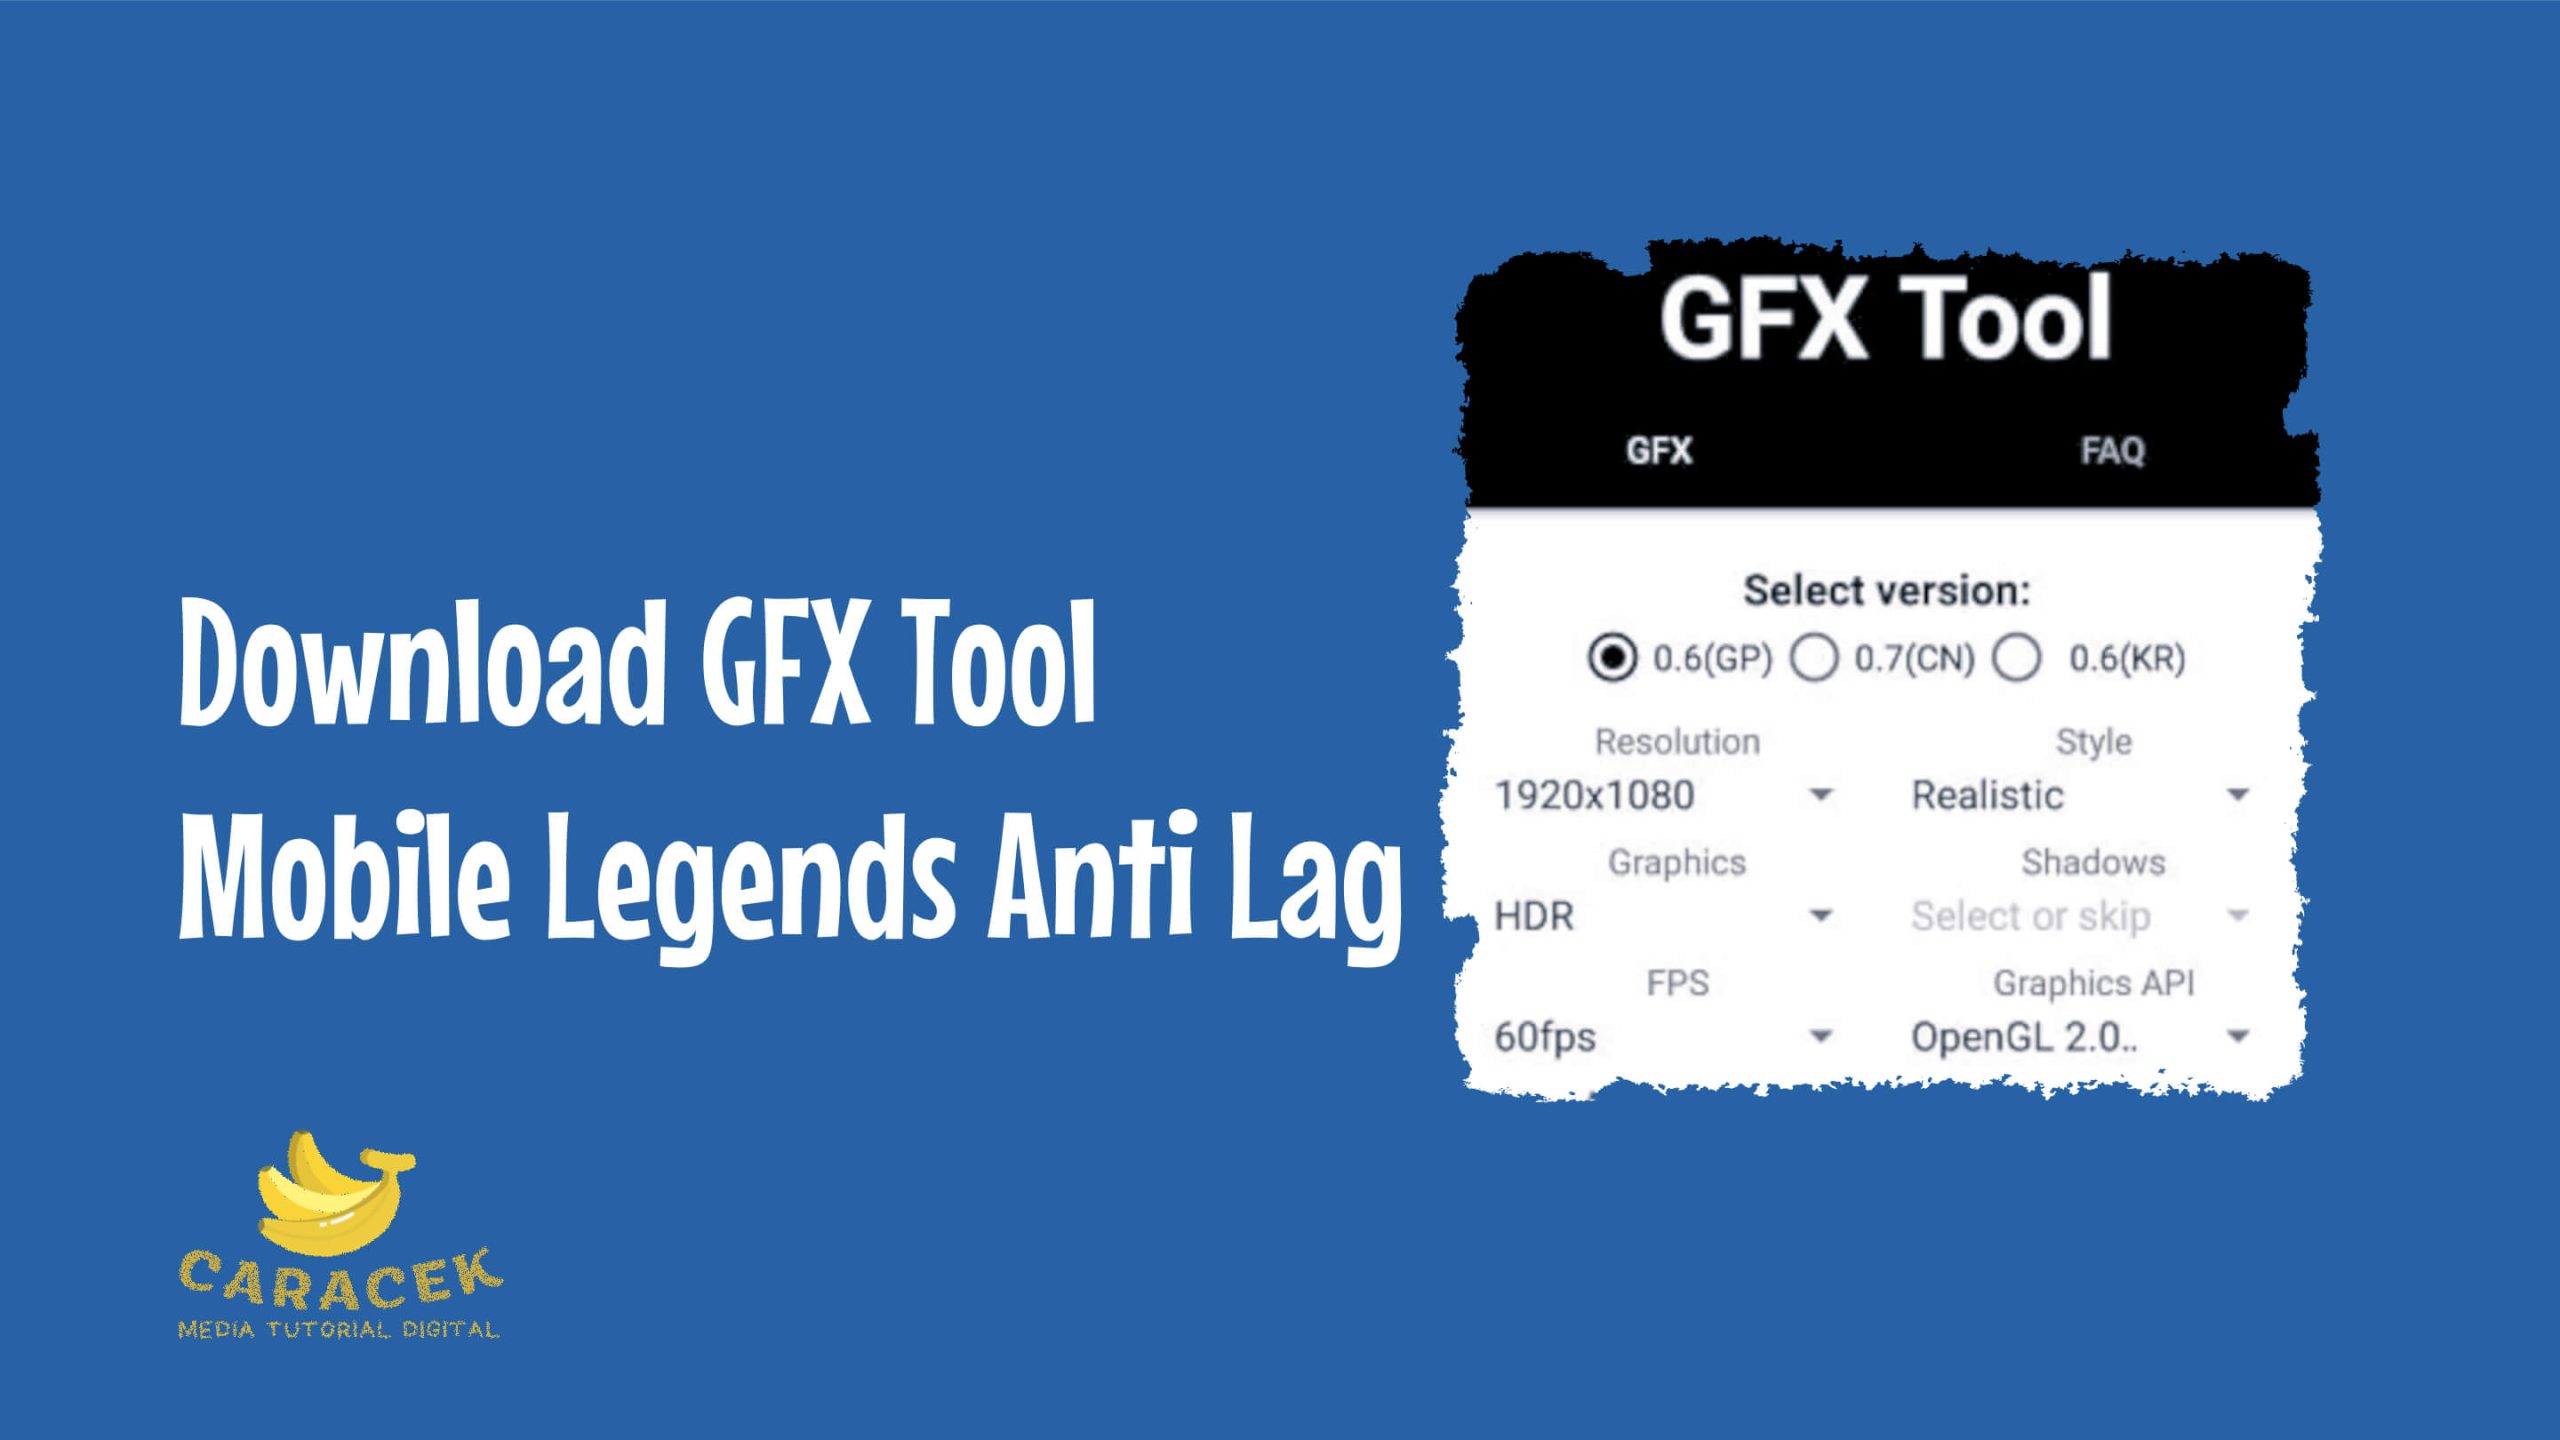 GFX Tool Mobile Legends Anti Lag